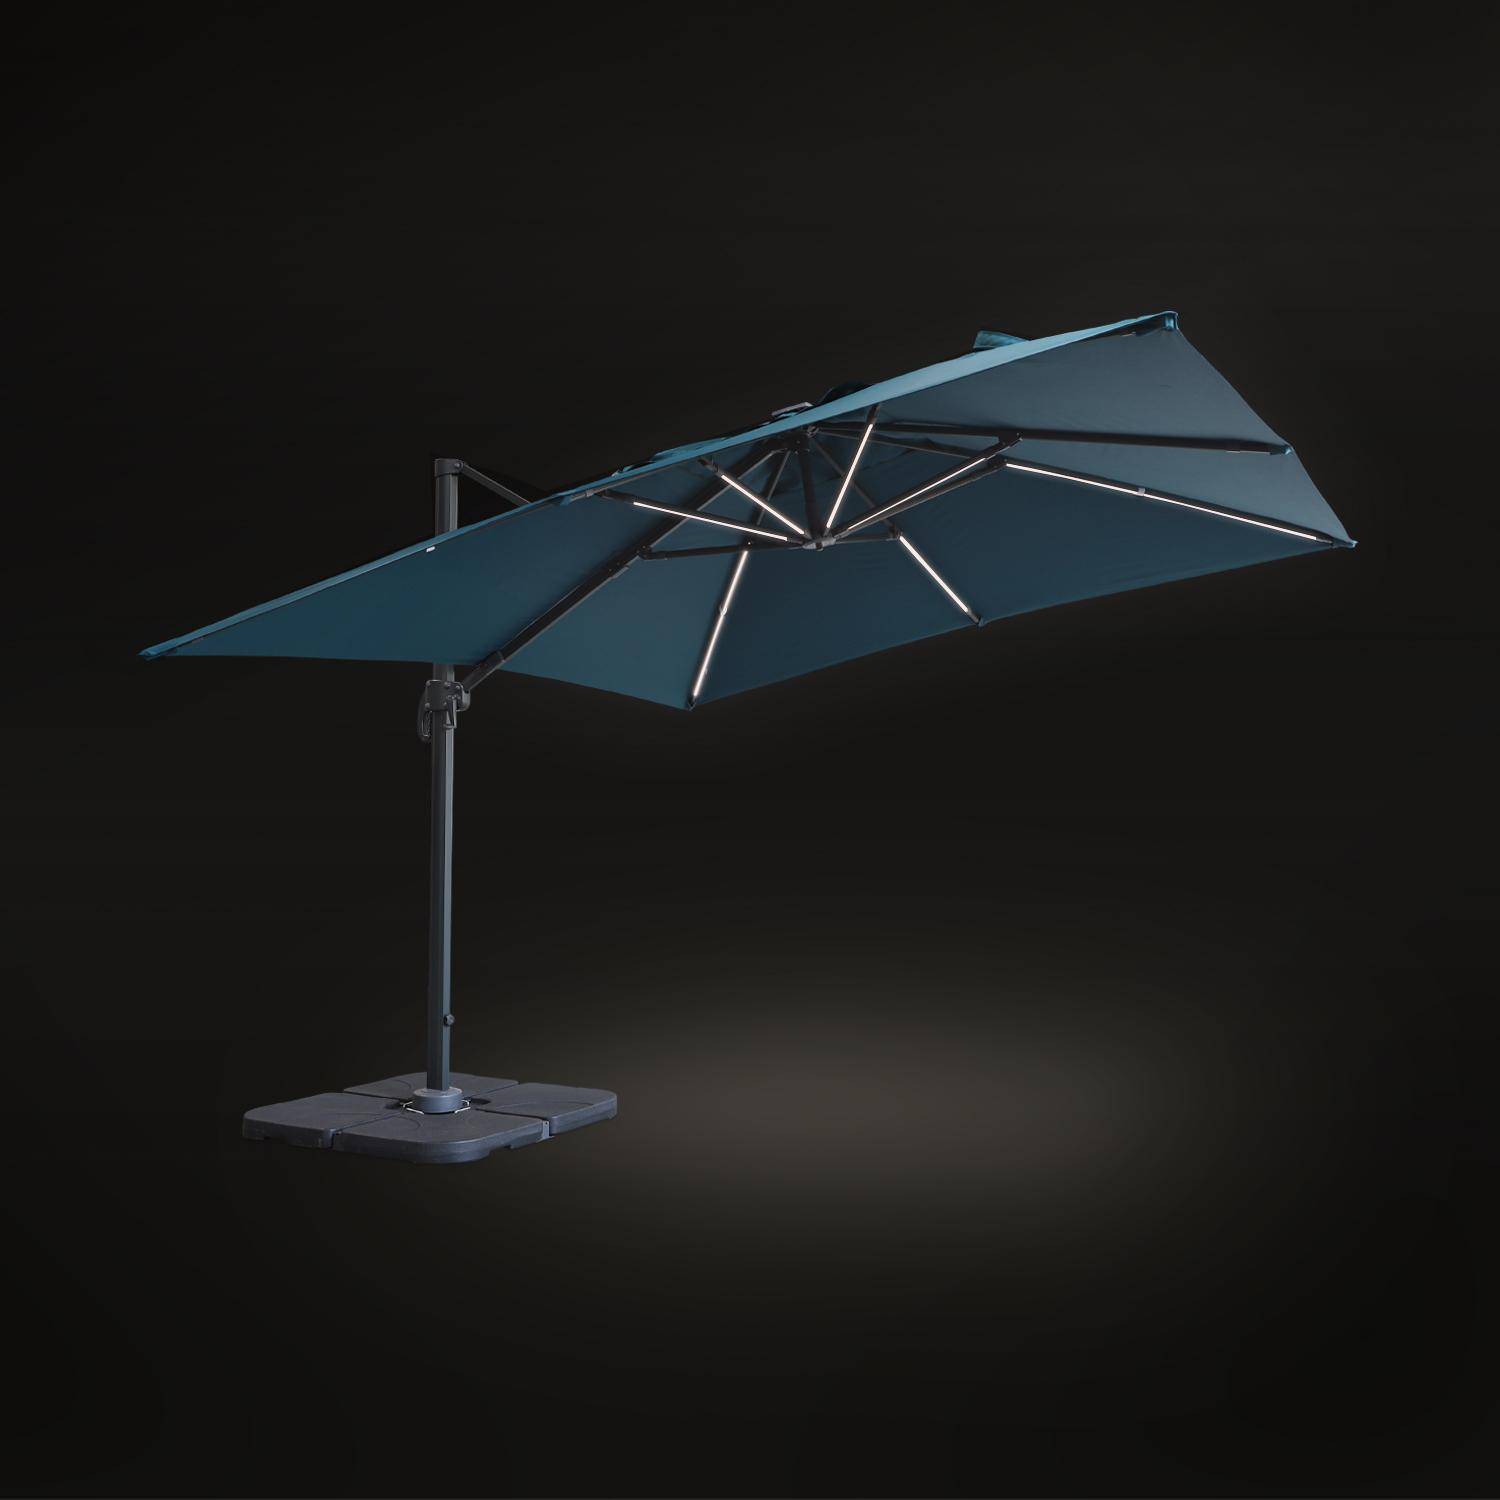 3x3m, Luce, eend blauwe LED parasol op zonne-energie met geïntegreerd licht + hoes,sweeek,Photo4